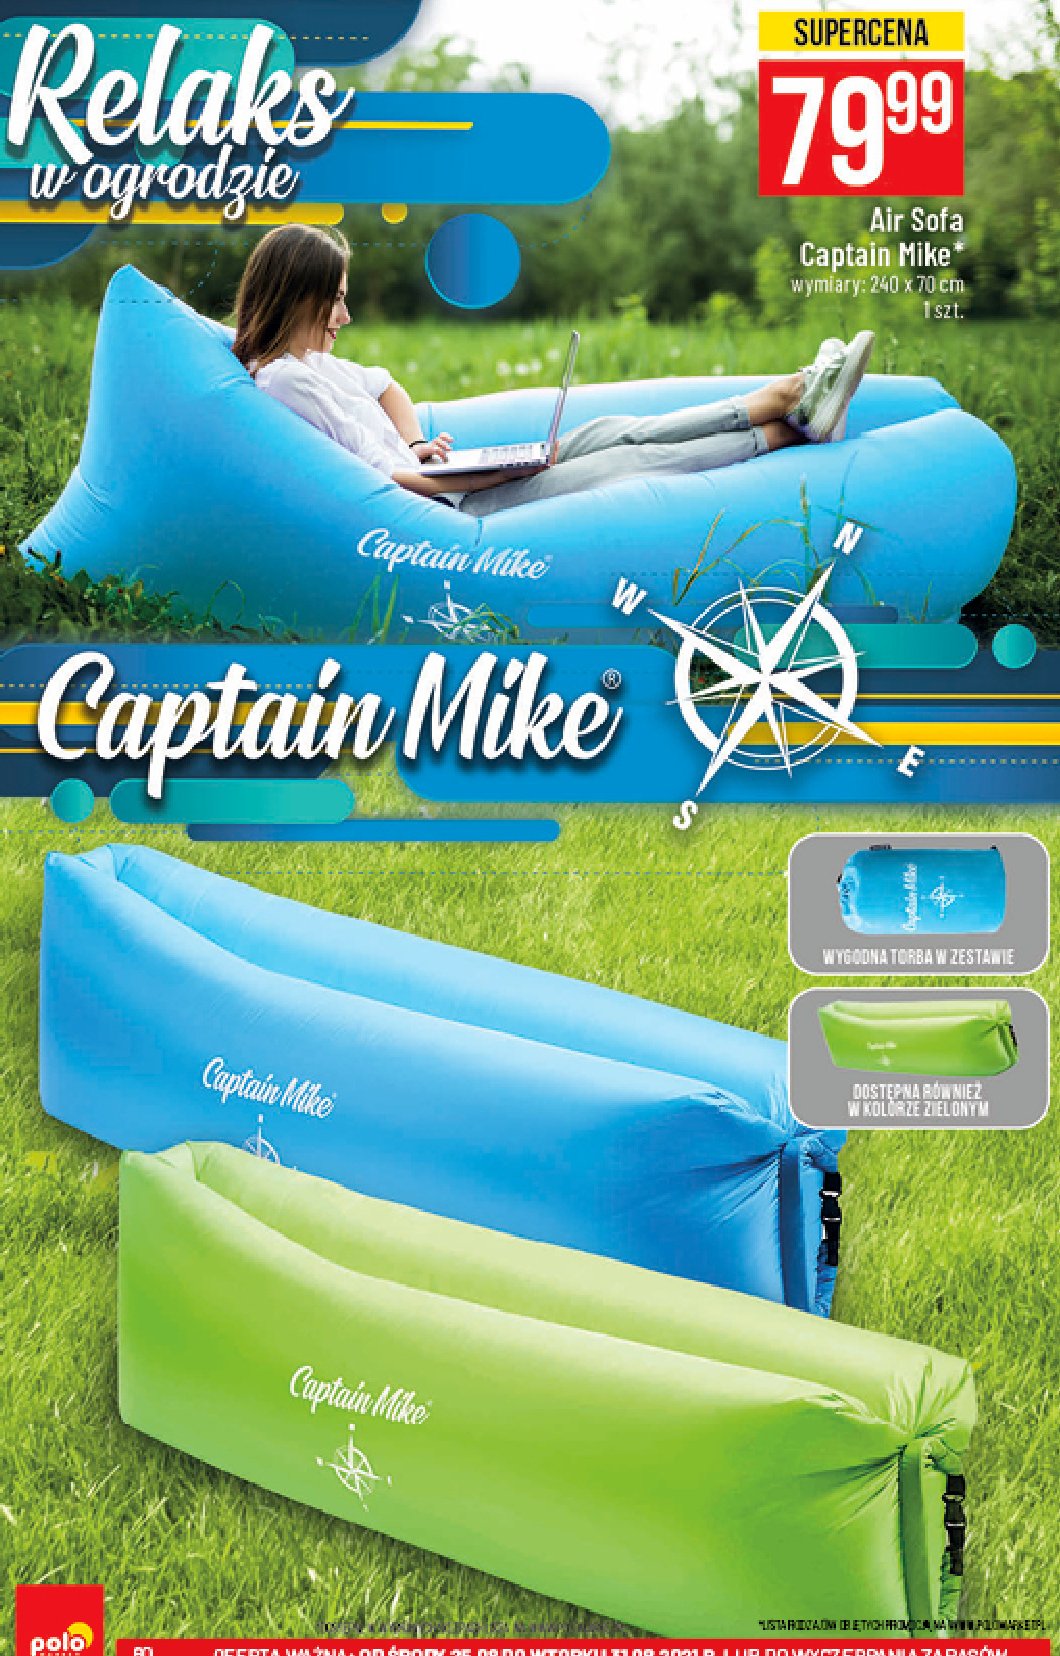 Air sofa 240 x 70 cm Captain mike promocja